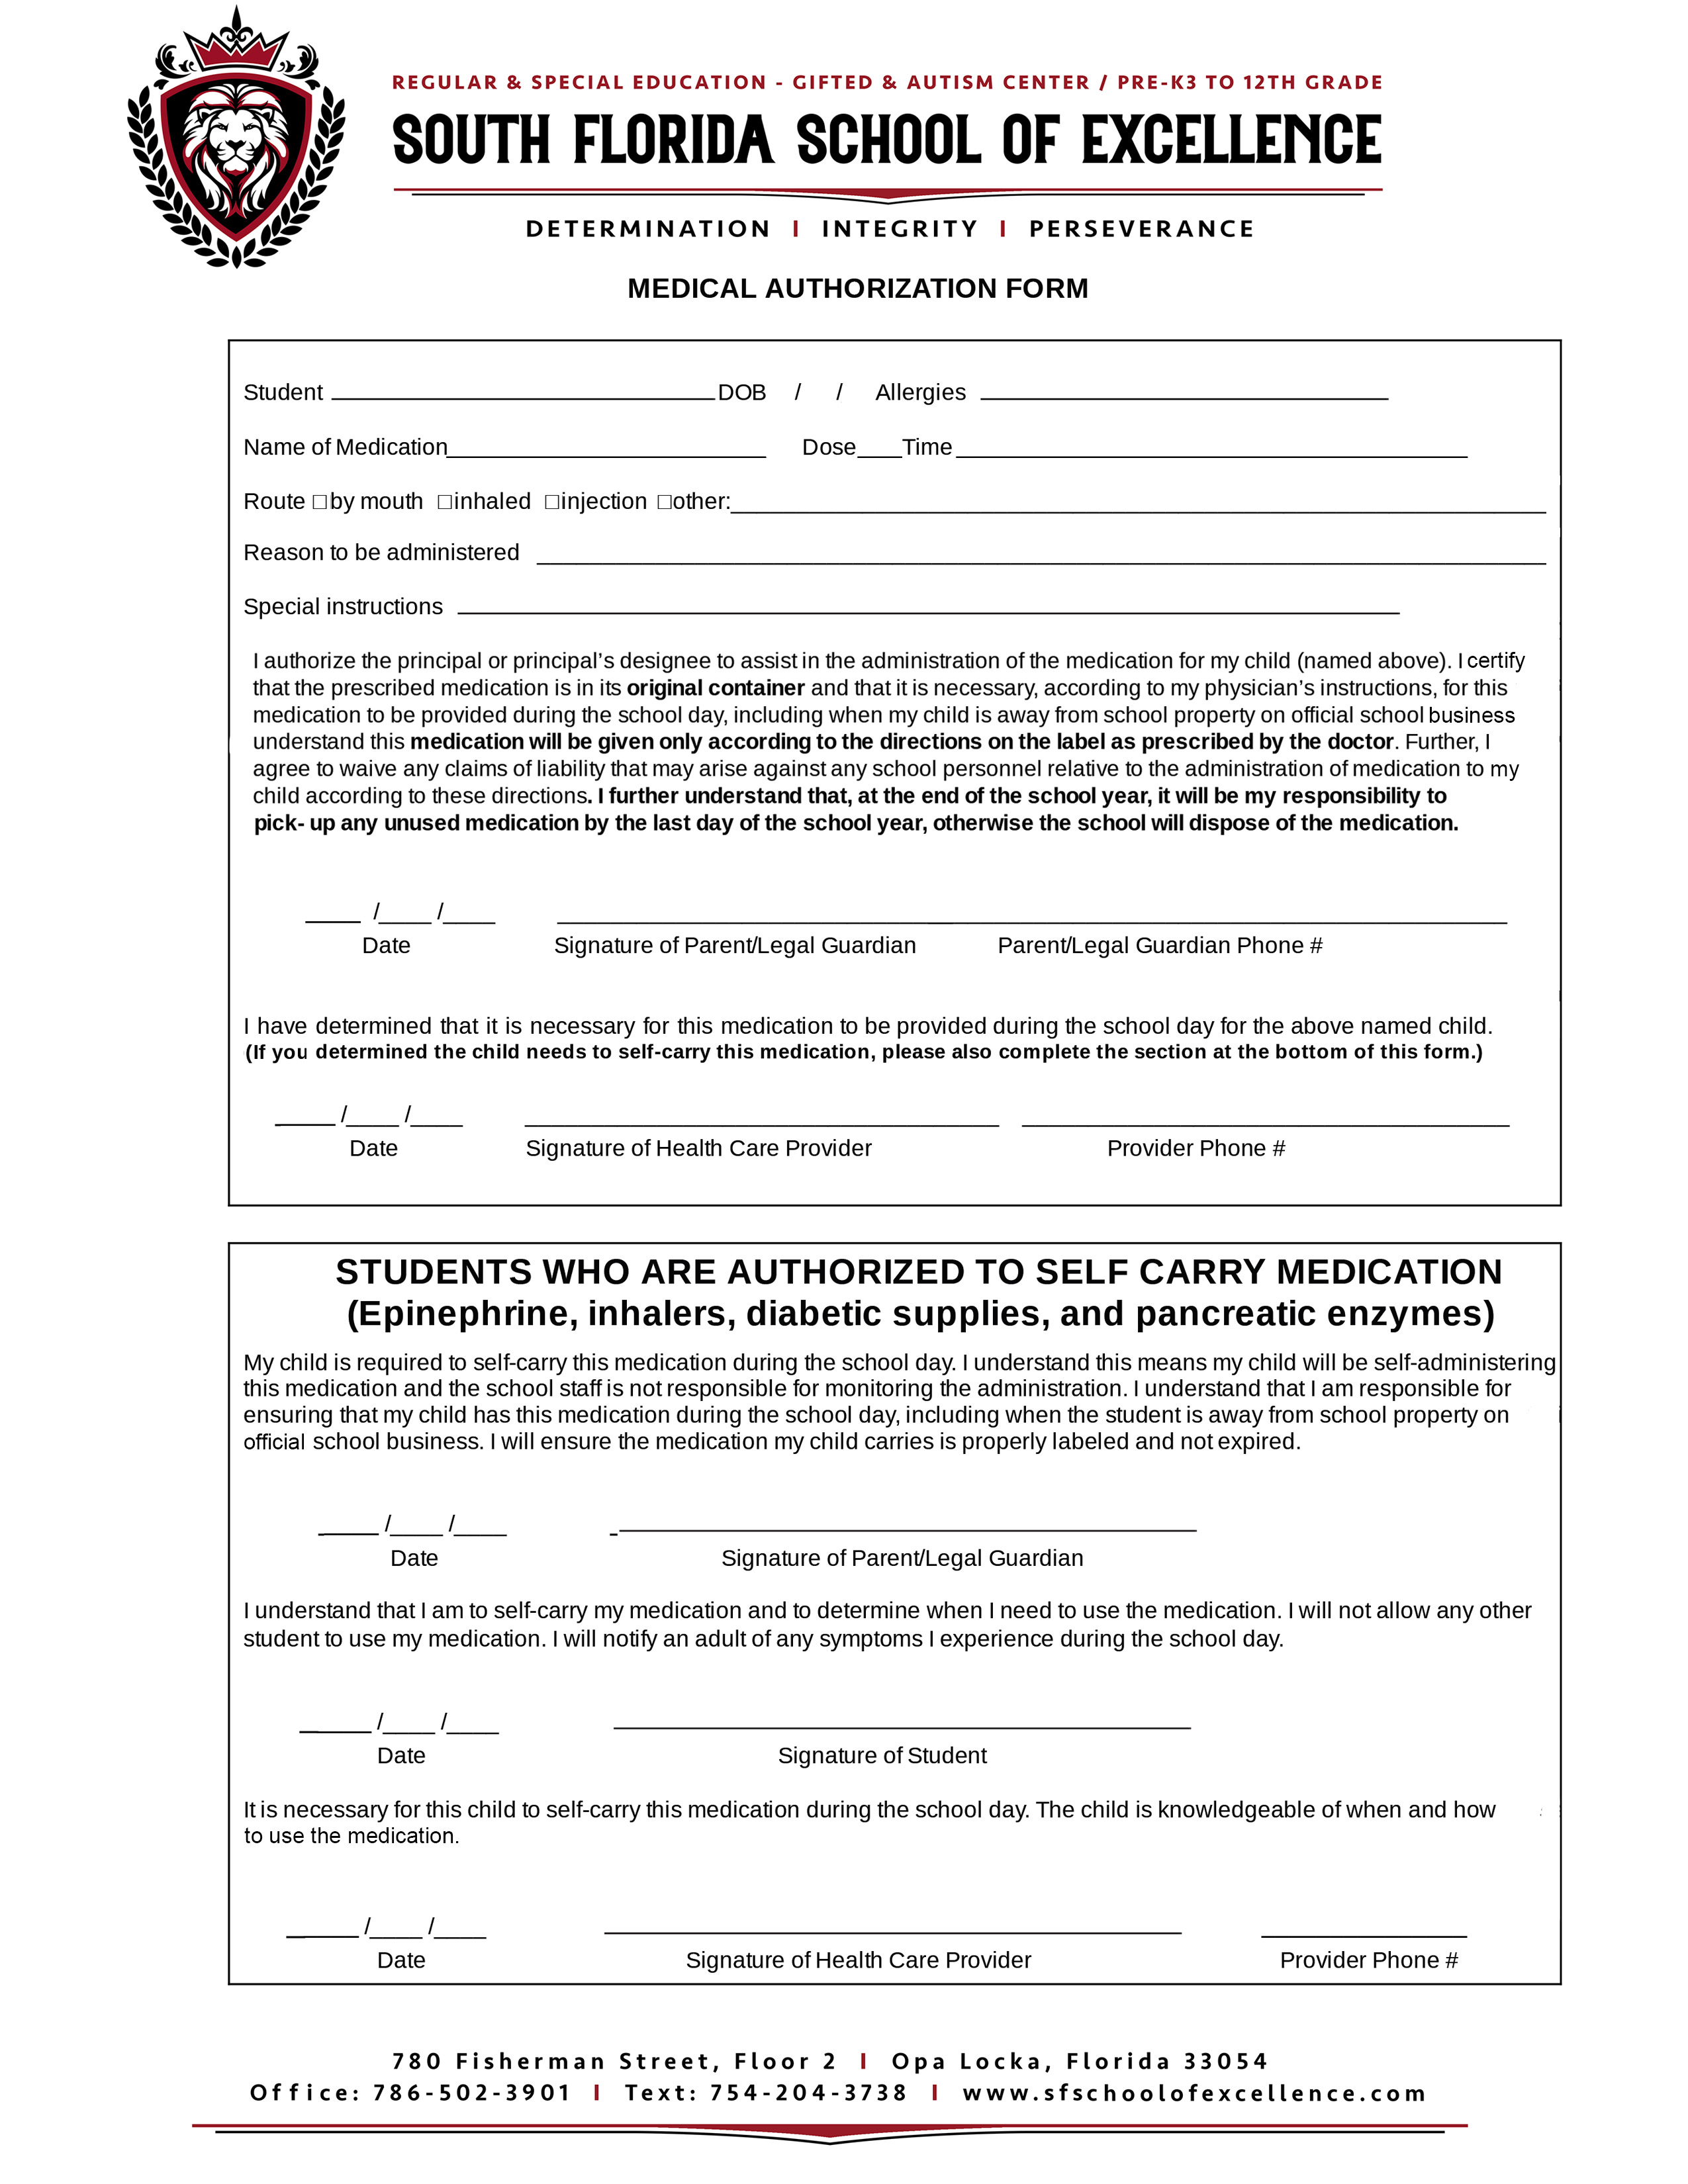 medical-authorization-form96-1